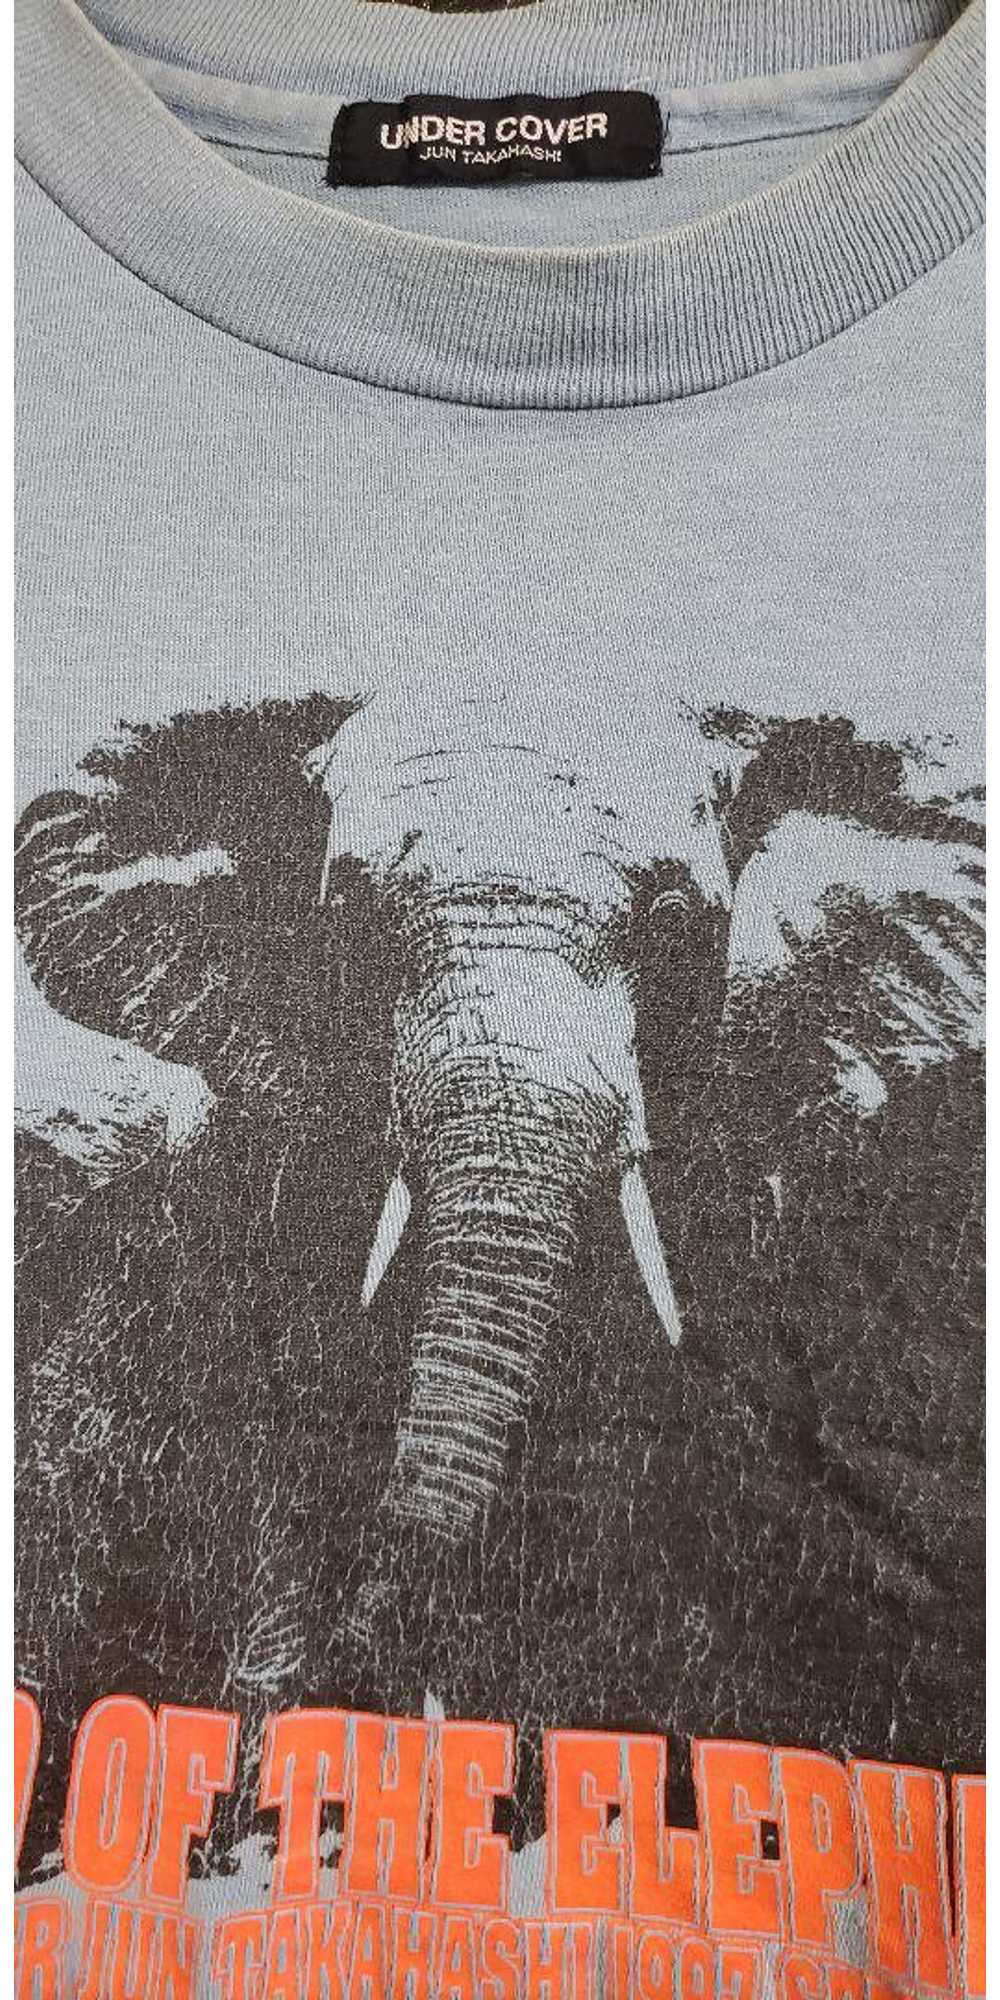 Undercover 90's "Echo of the Elephants" Tee - image 3